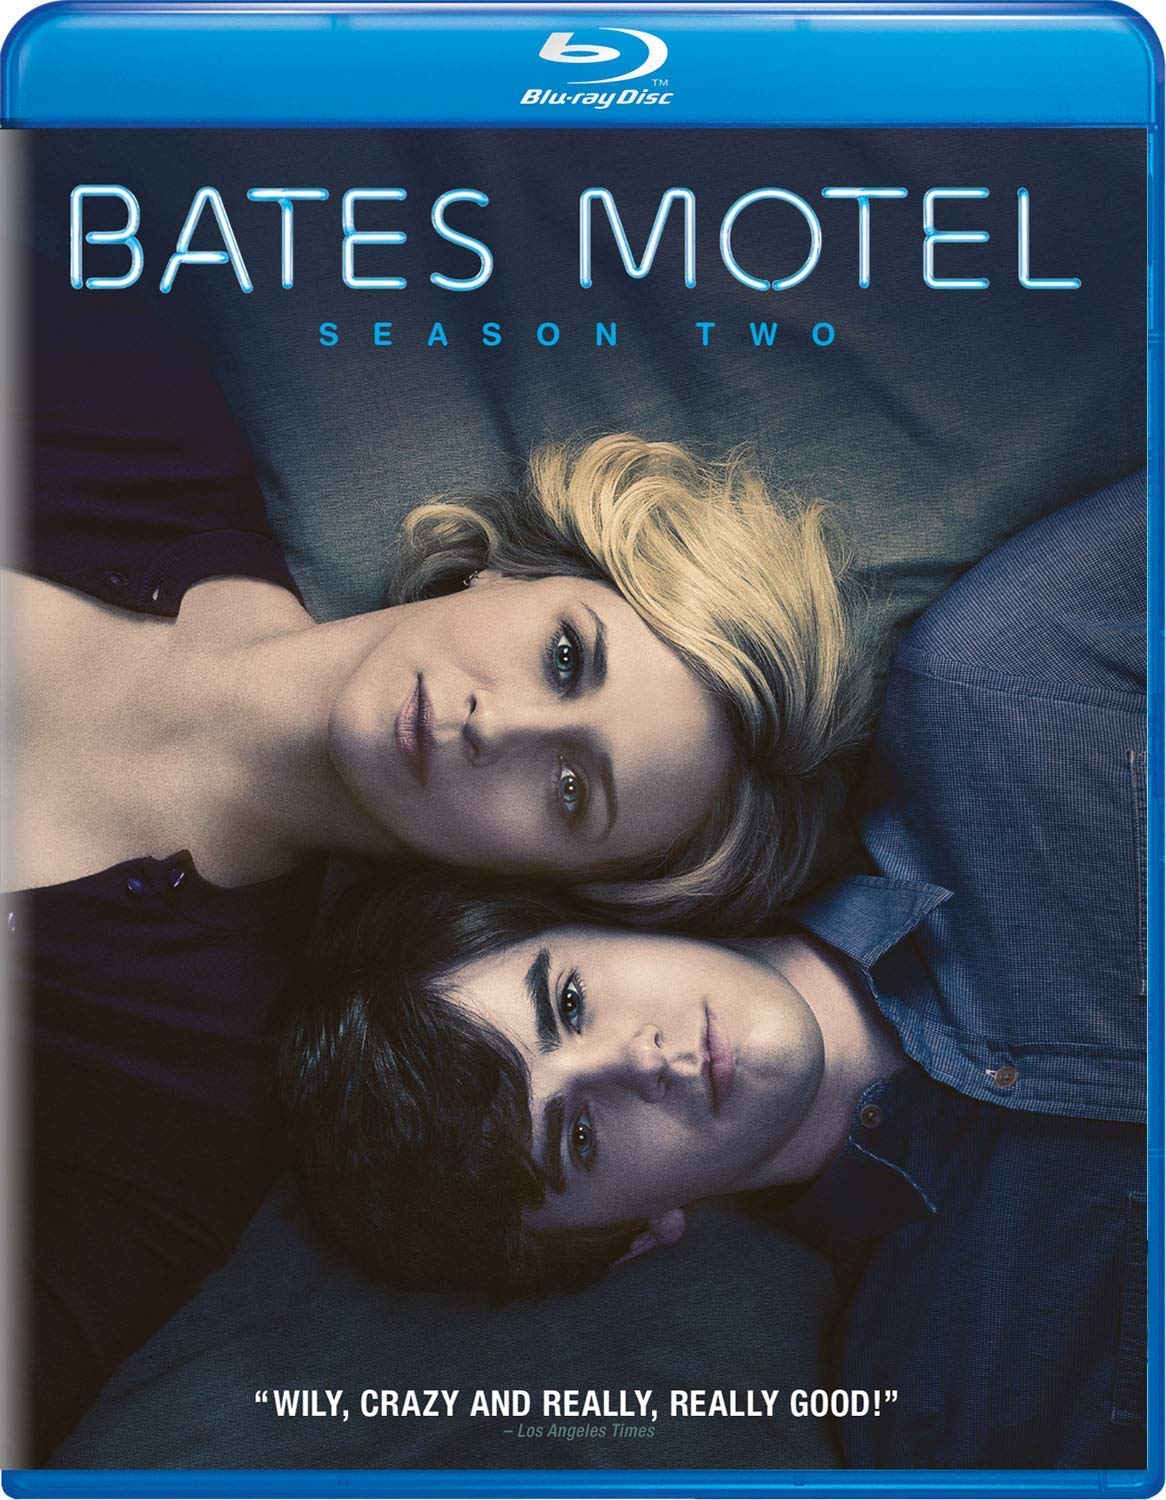 Bates Motel Season 2 Complete Download